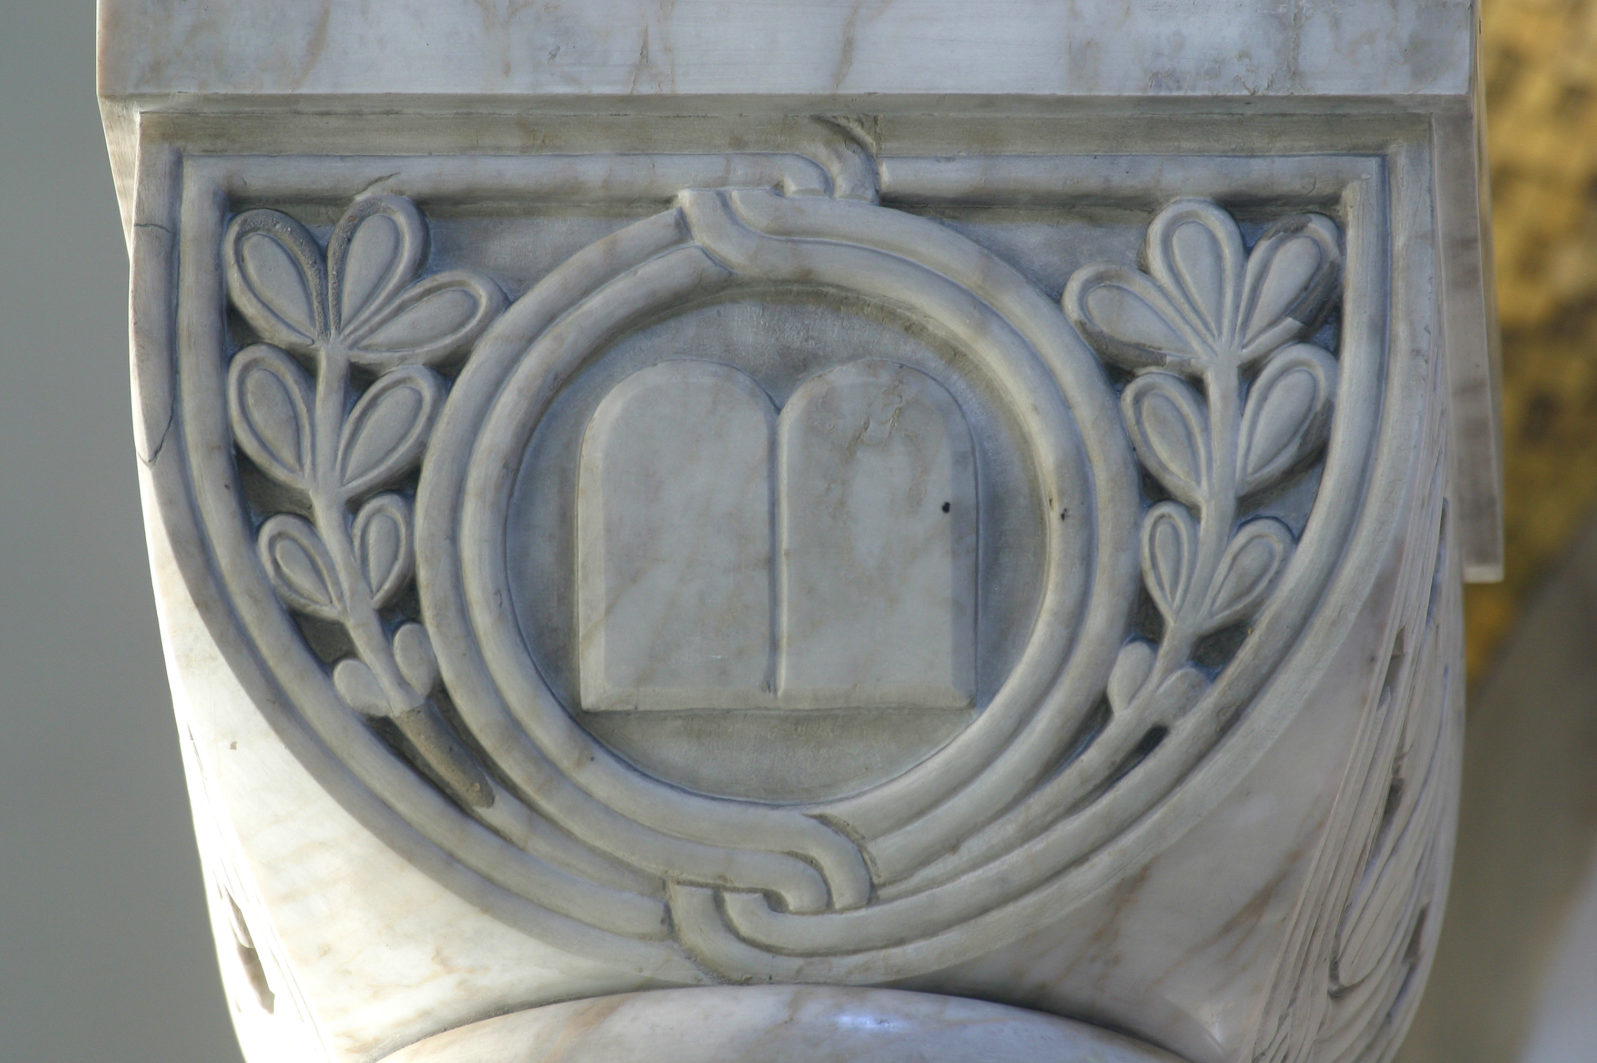 Ten Commandments, historic church column ornate detail